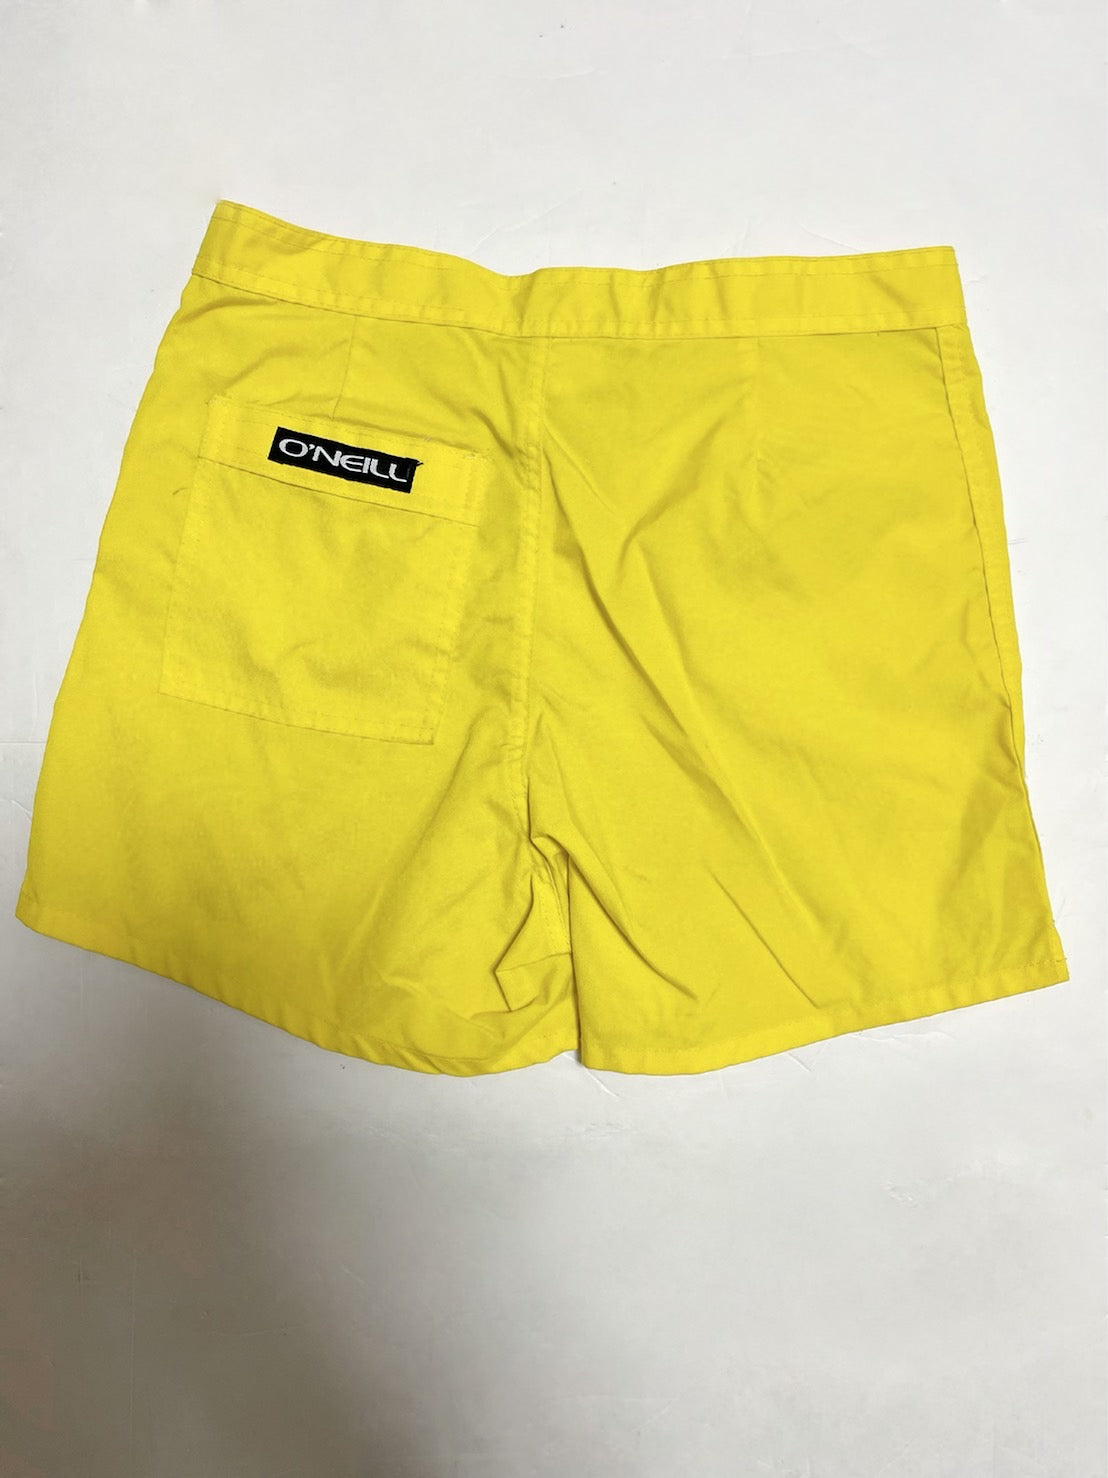 80s O'Neill board shorts USA made in USA size 30 オニール メンズ 水着 サーフパンツ ボードショーツ (30インチ )